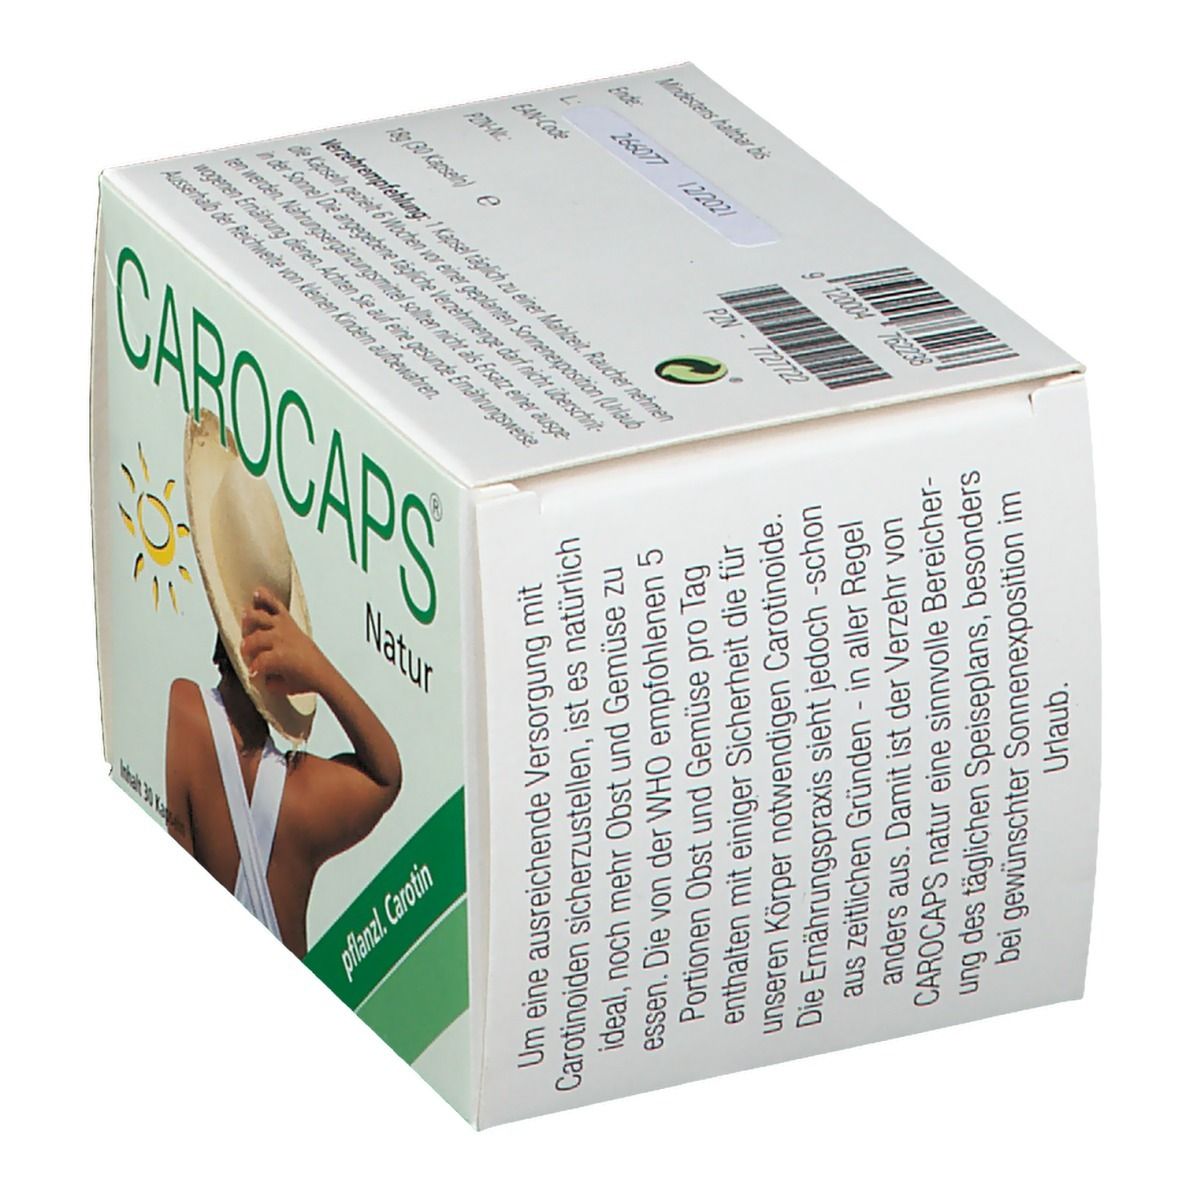 Carocaps® 50 Natur Kapseln